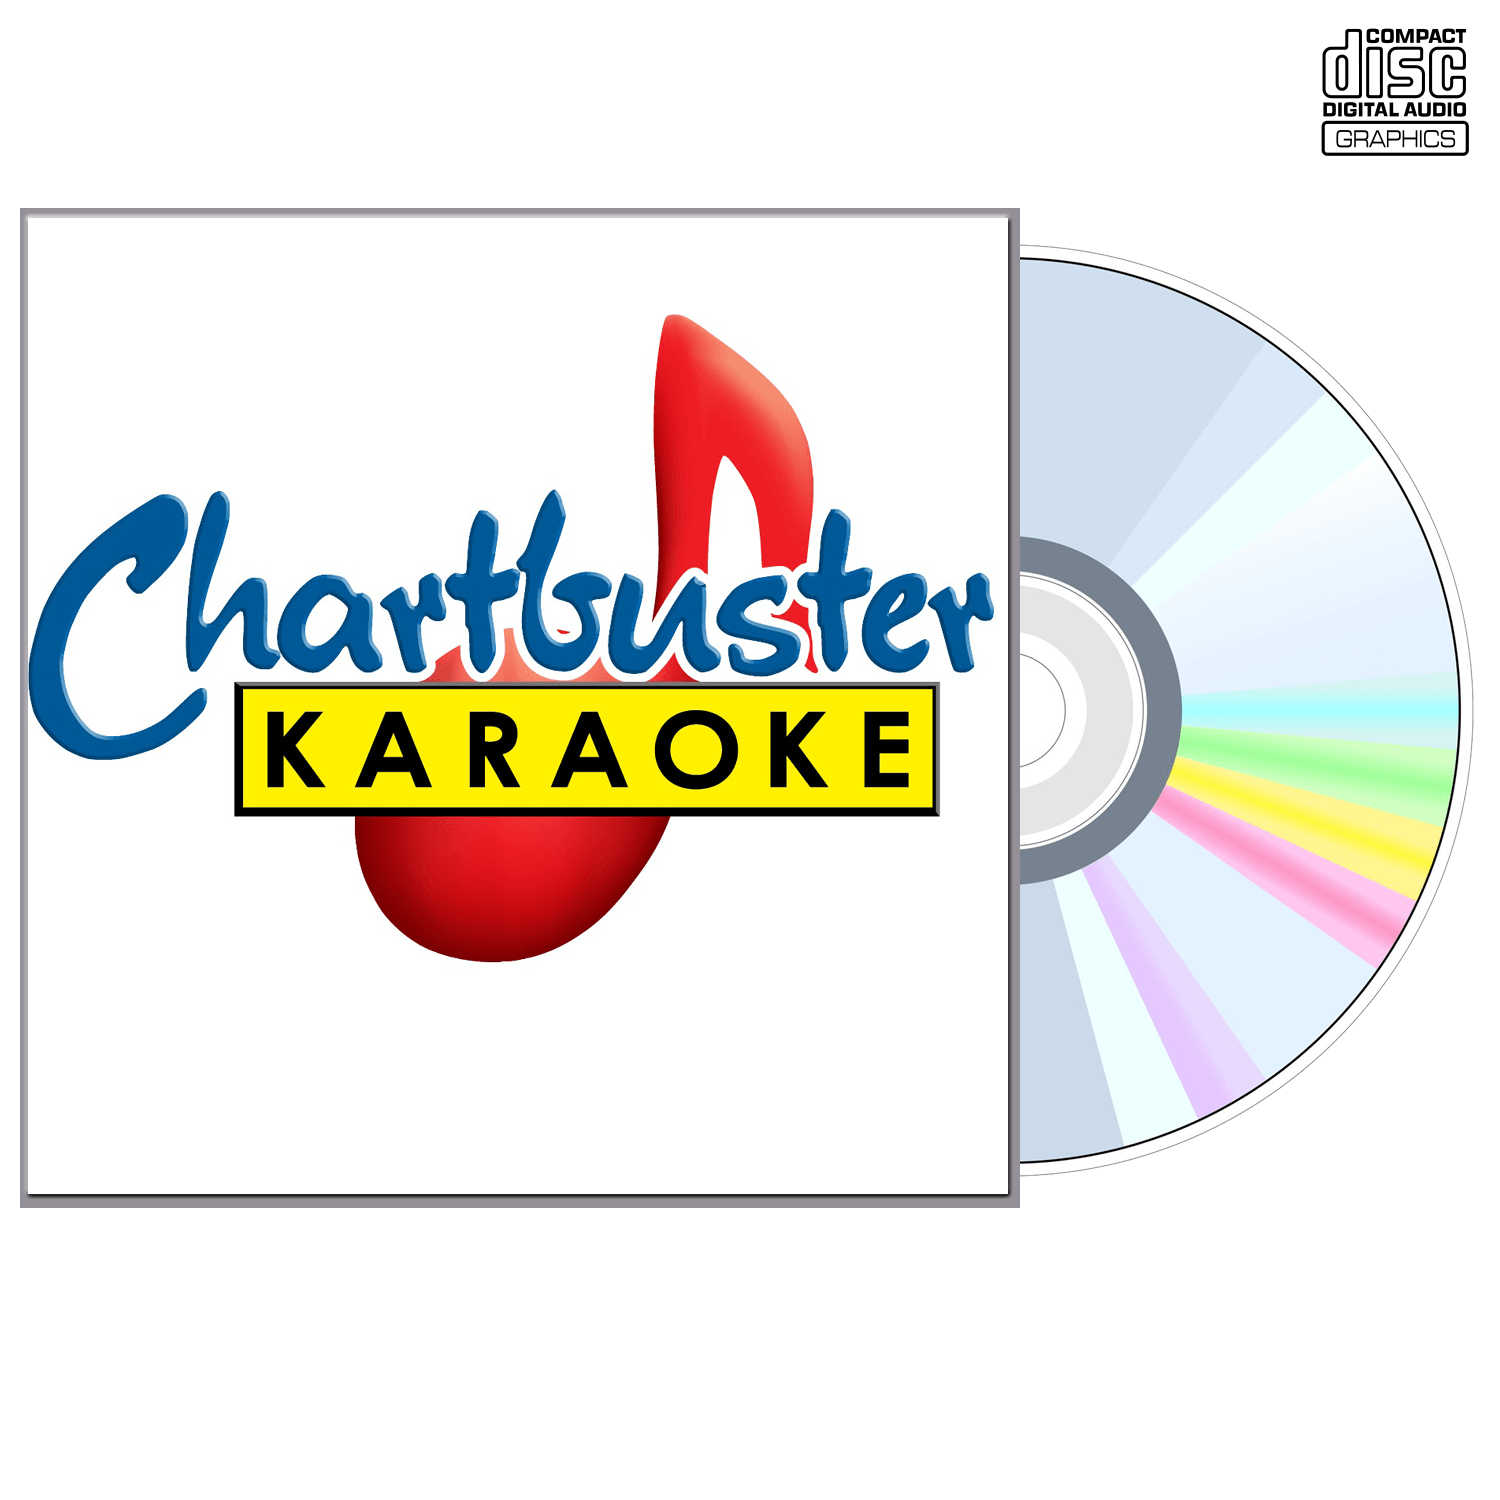 Lionel Richie - CD+G - Chartbuster Karaoke - Karaoke Home Entertainment